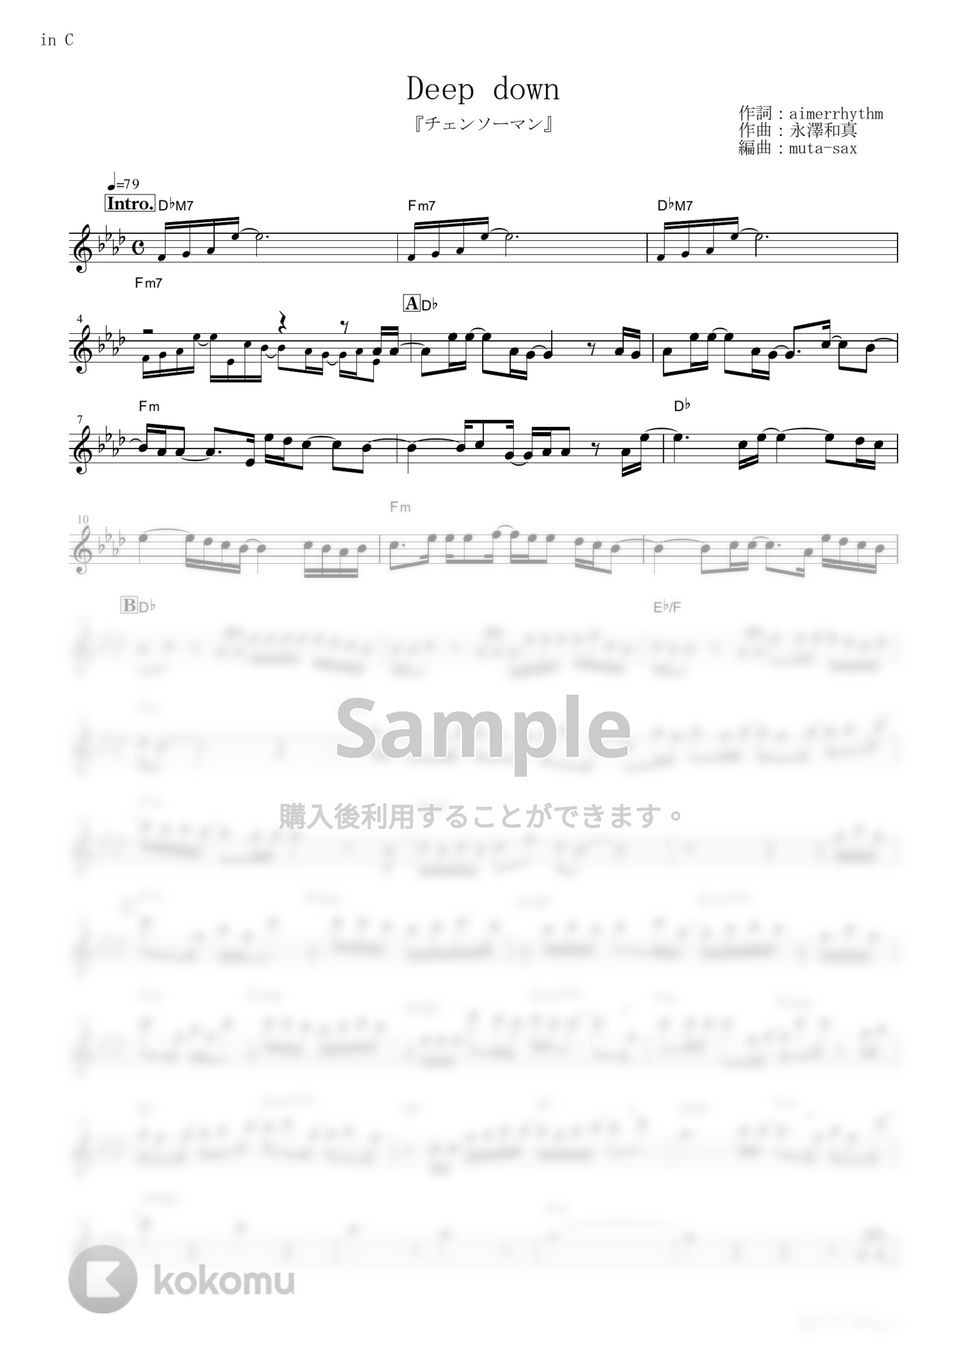 Aimer - Deep down (『チェンソーマン』 / in C) by muta-sax